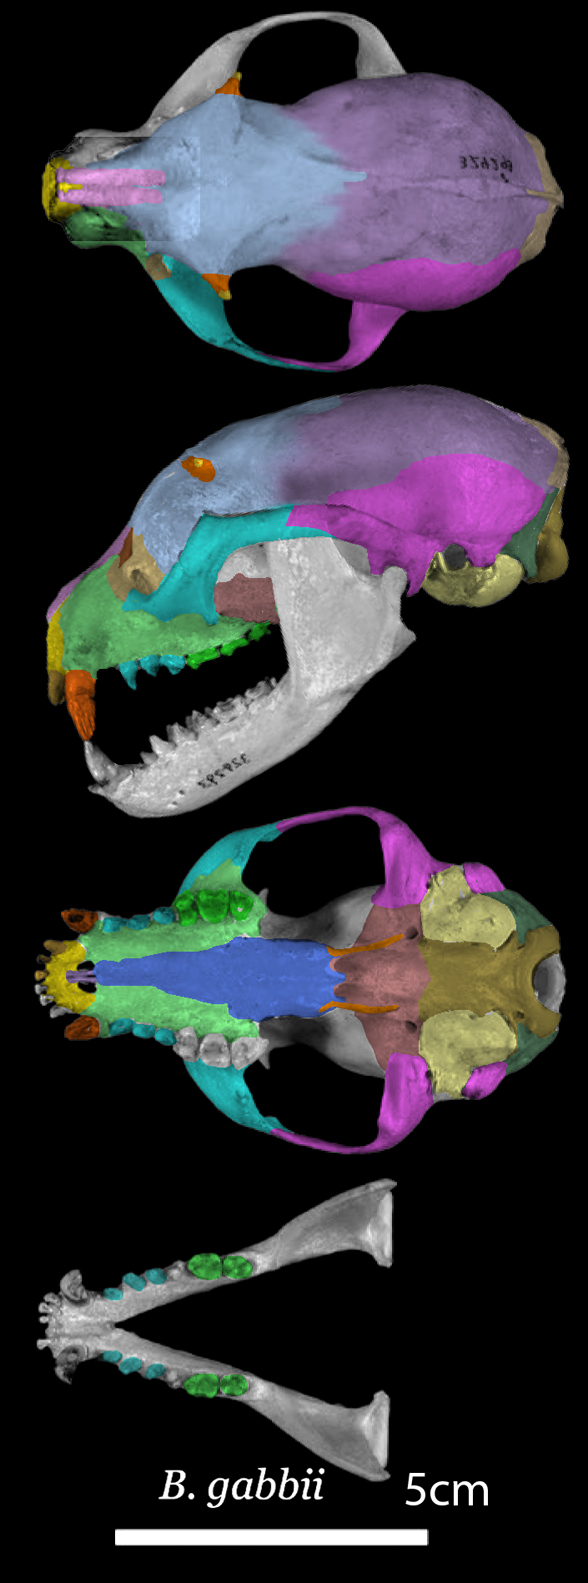 Bassaricyon skull in 3 views